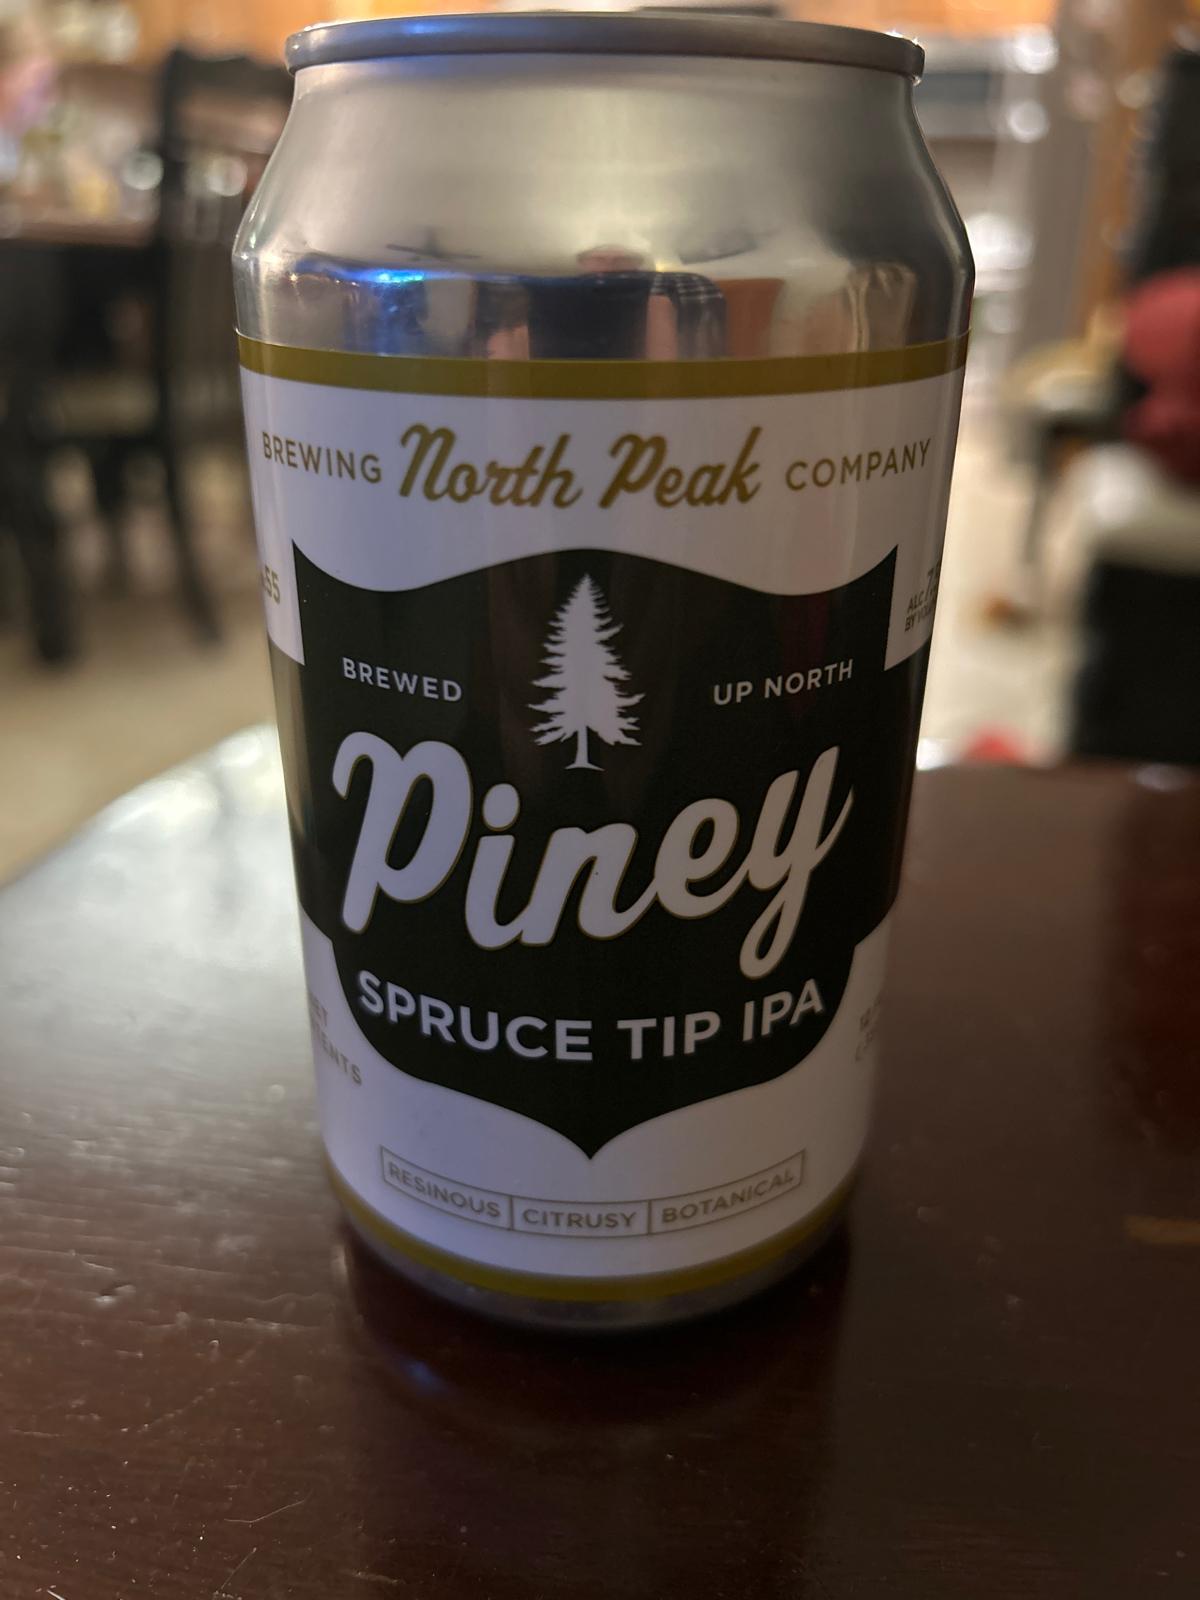 Piney Spruce Tip IPA